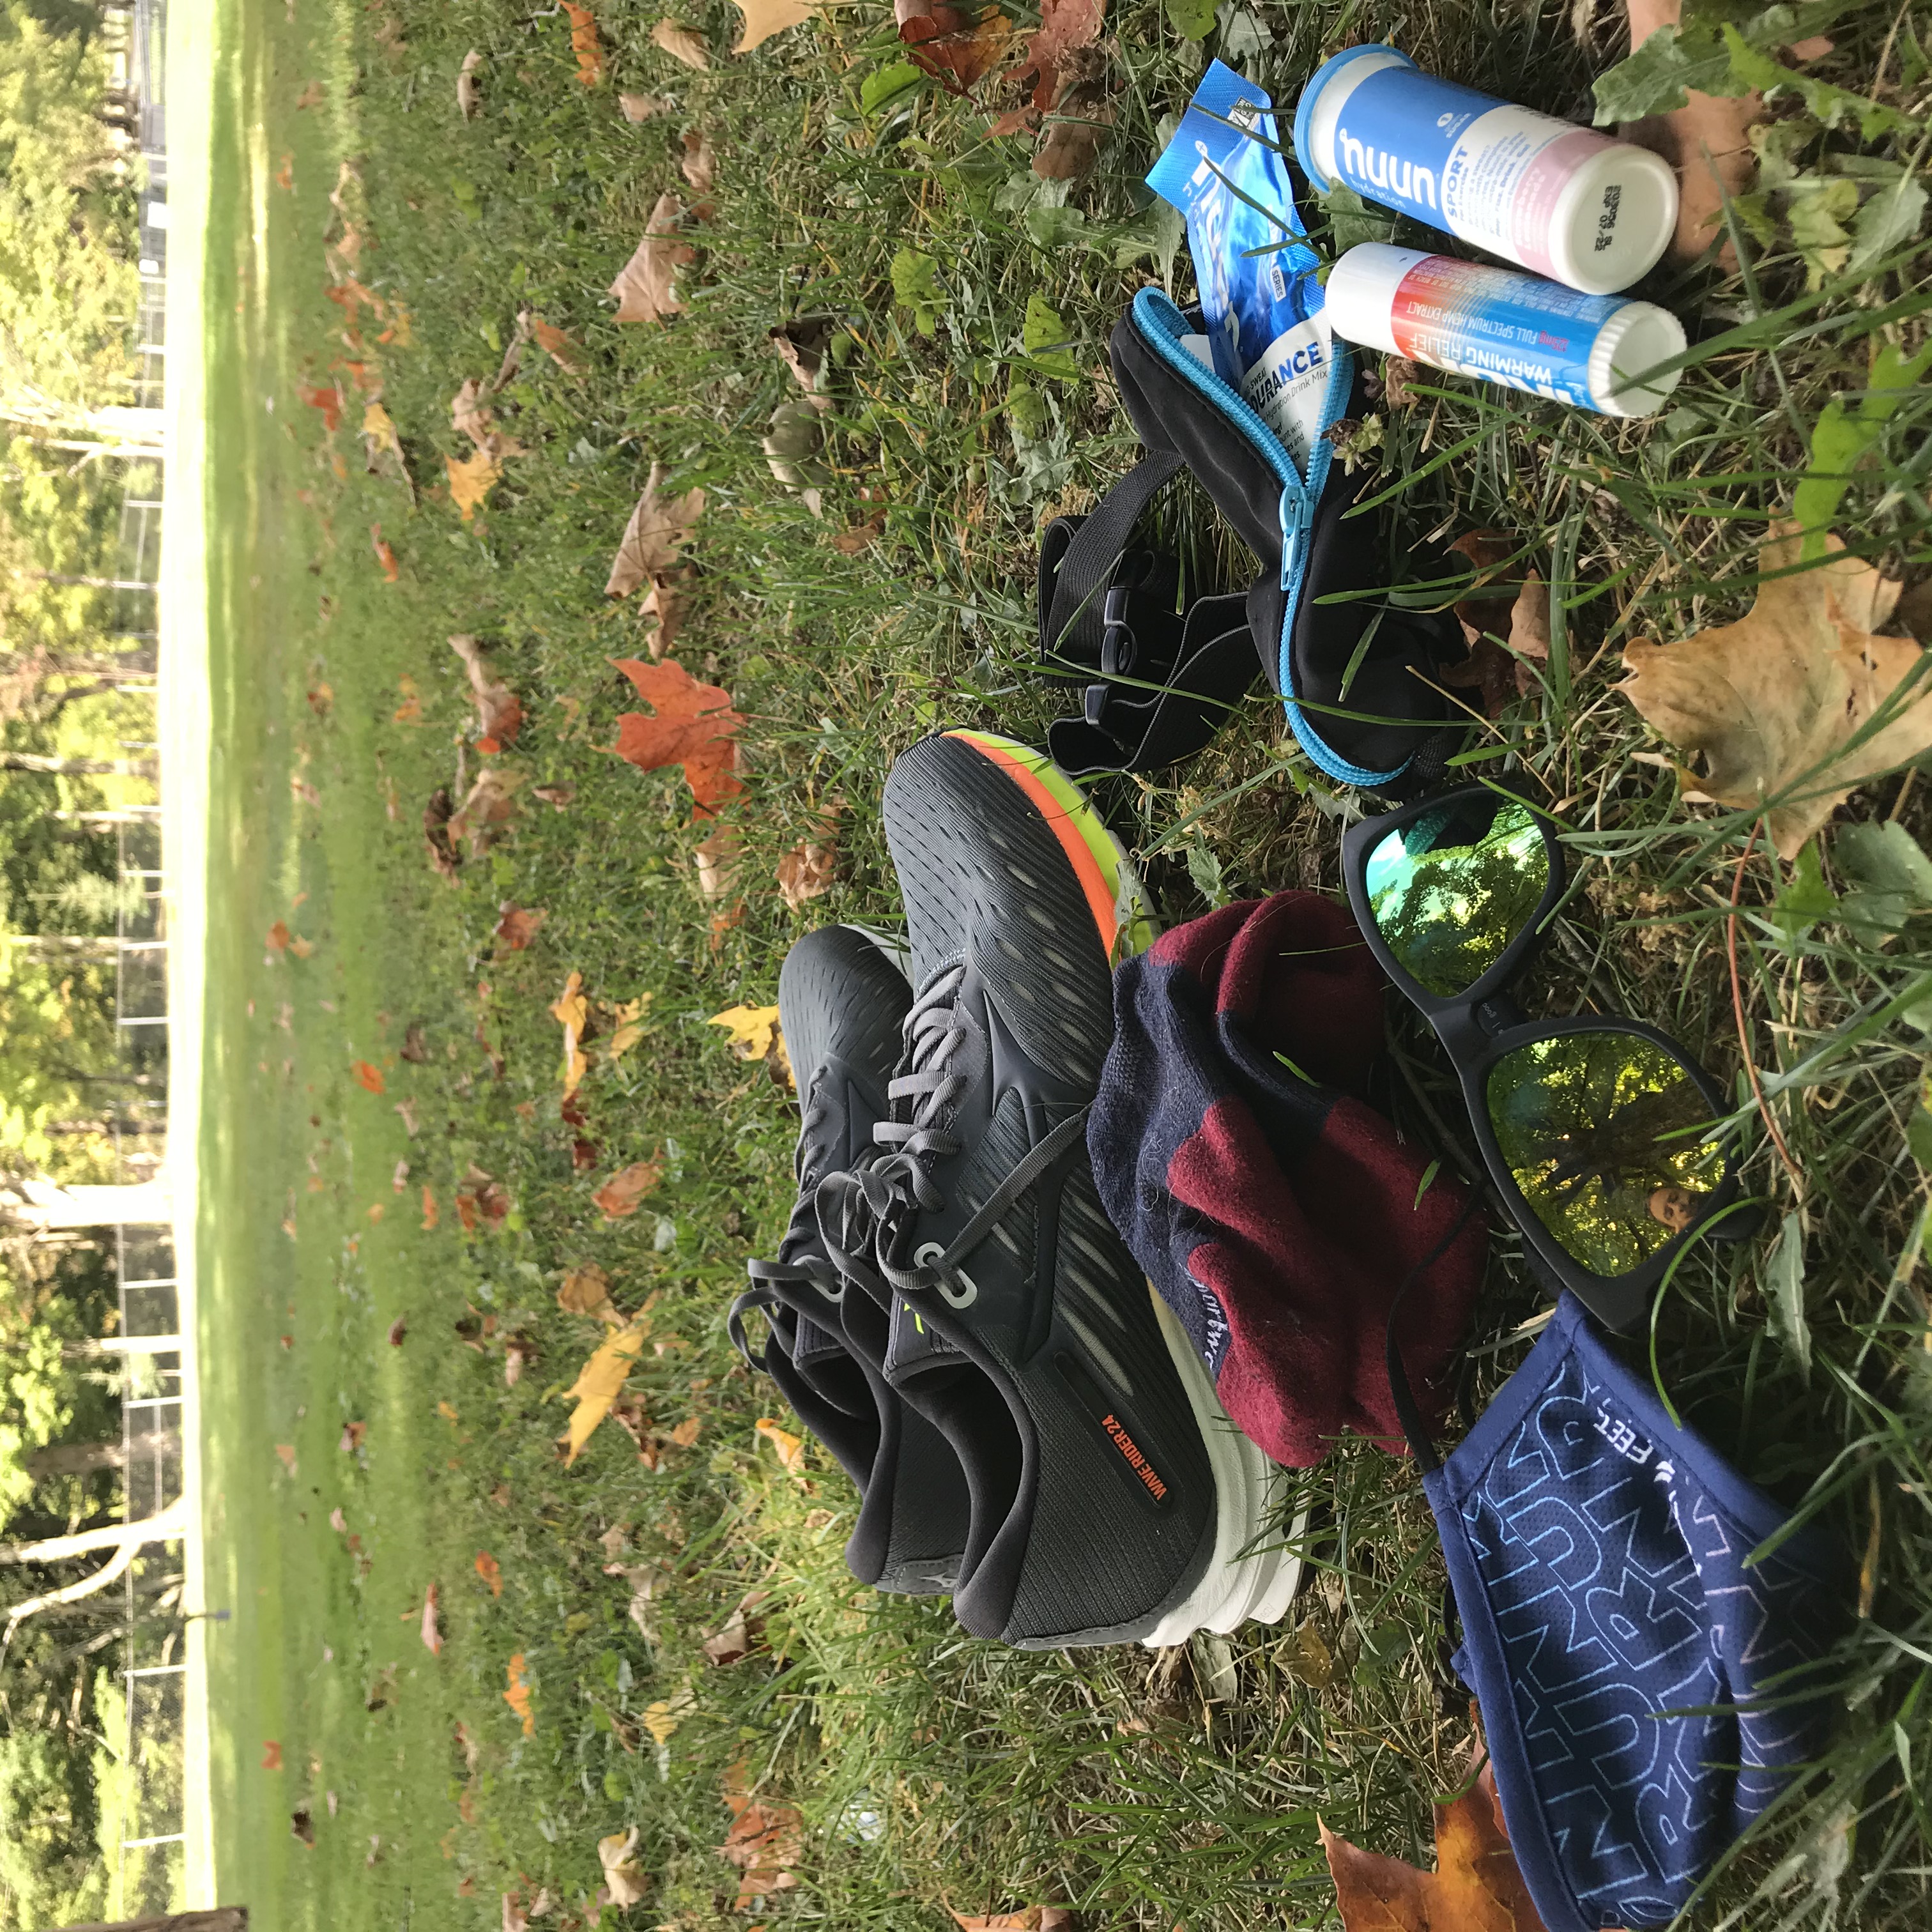 fall running gear laydown